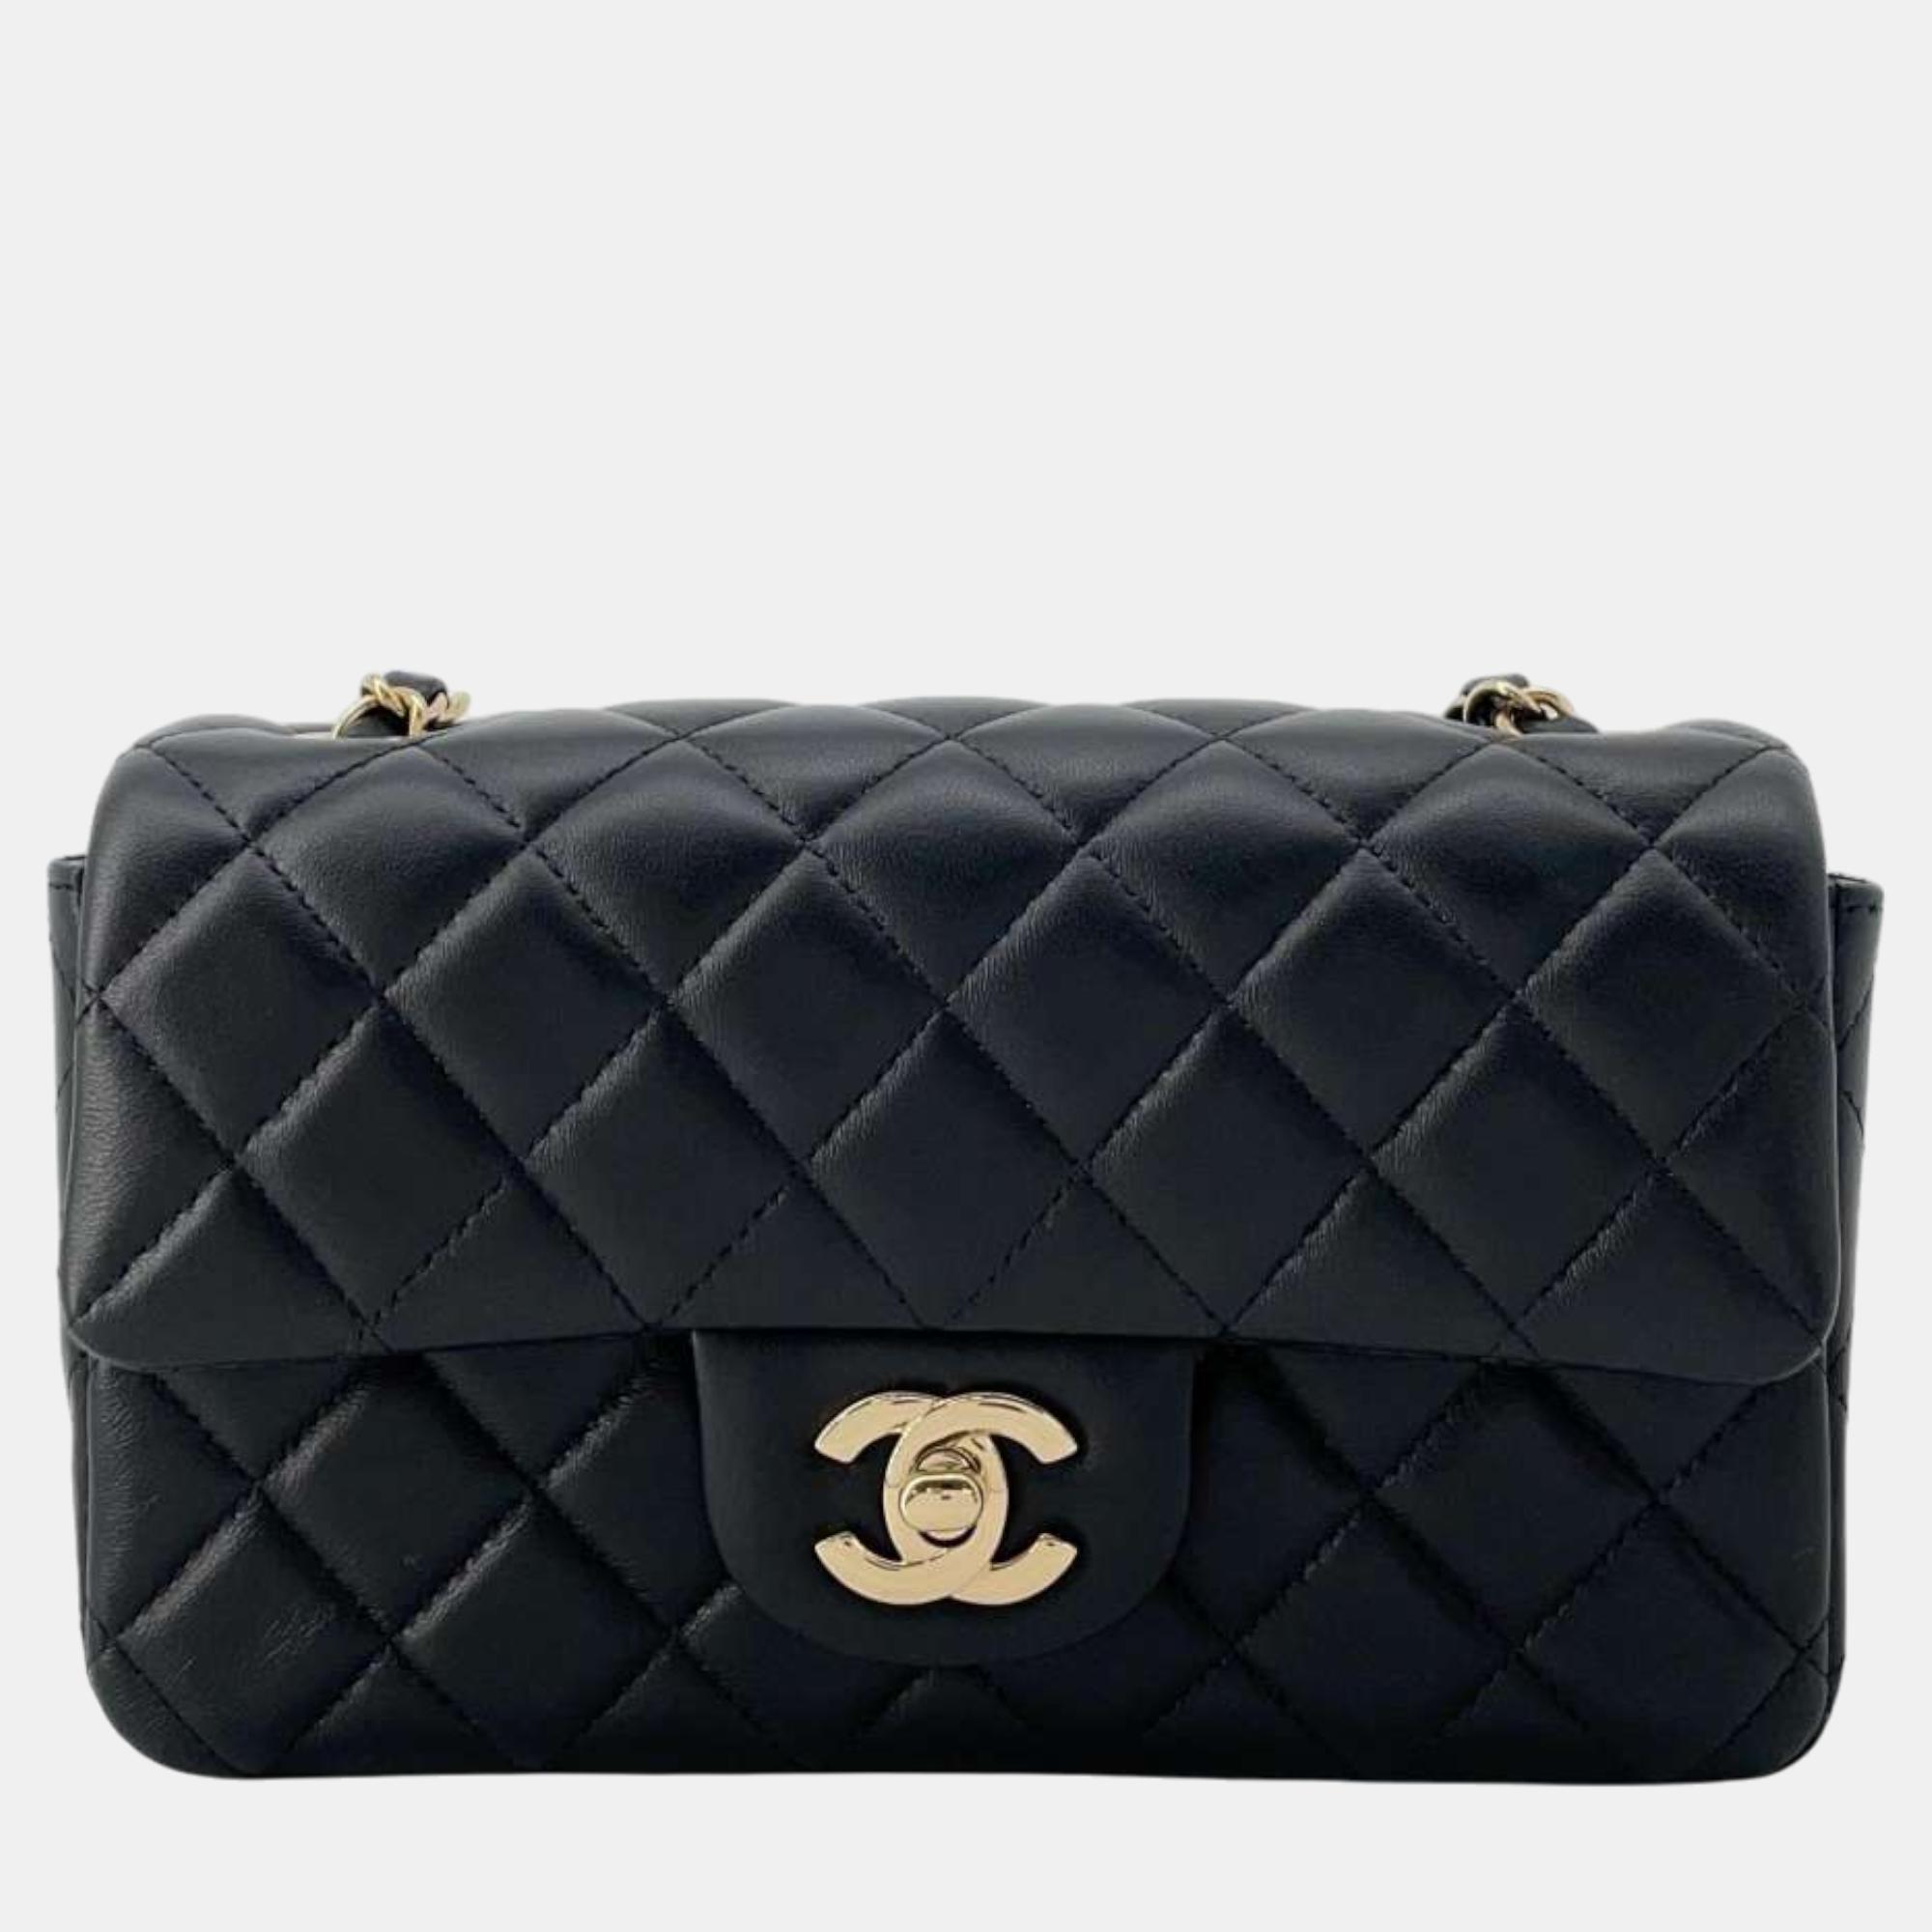 Chanel black leather classic flap mini bag